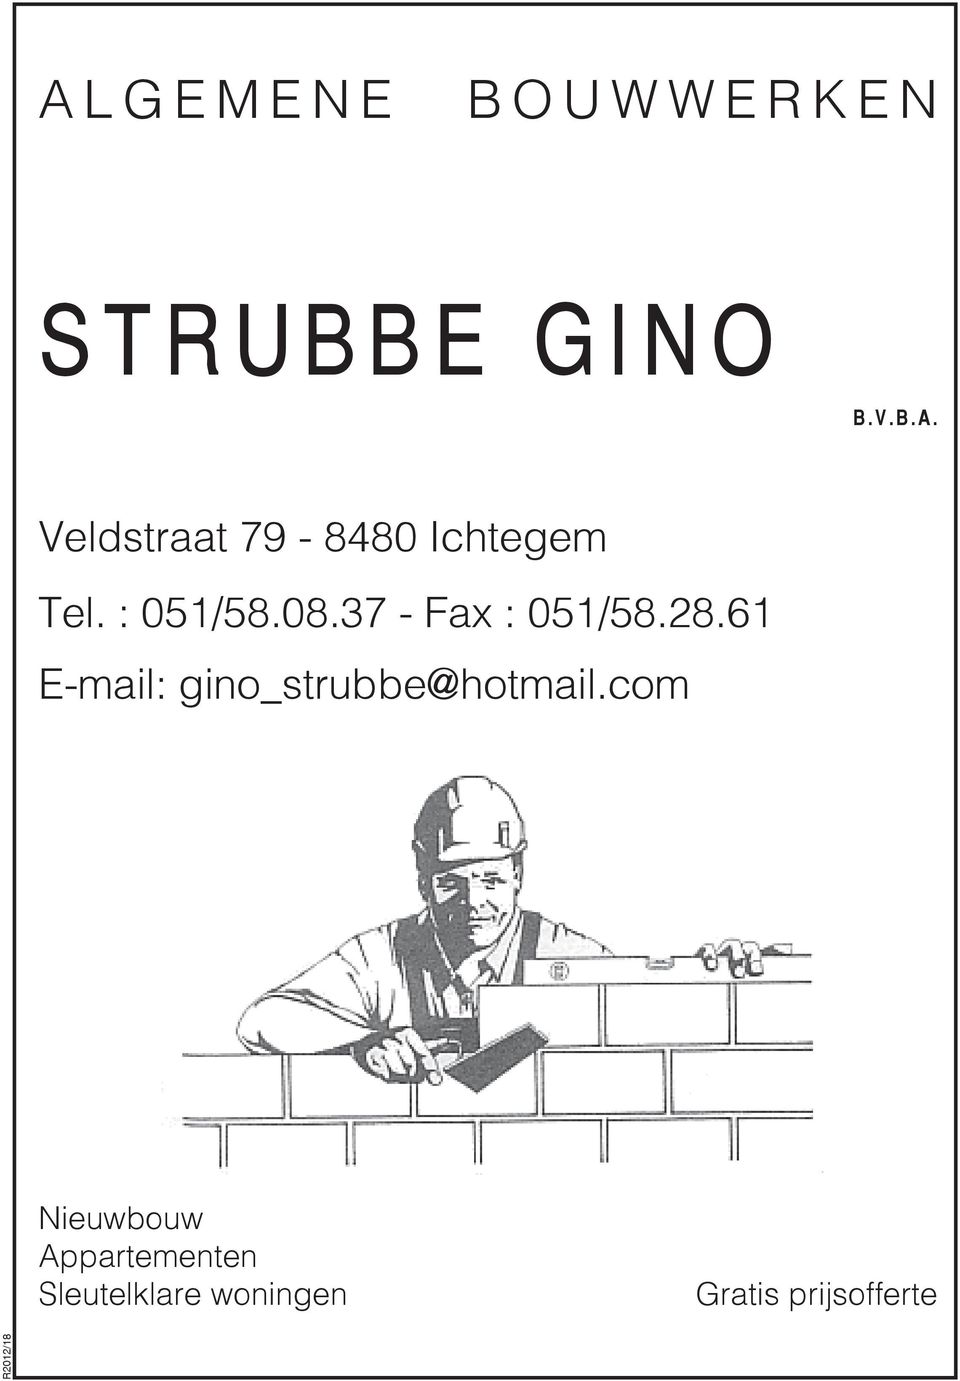 37 - Fax : 051/58.28.61 E-mail: gino_strubbe@hotmail.